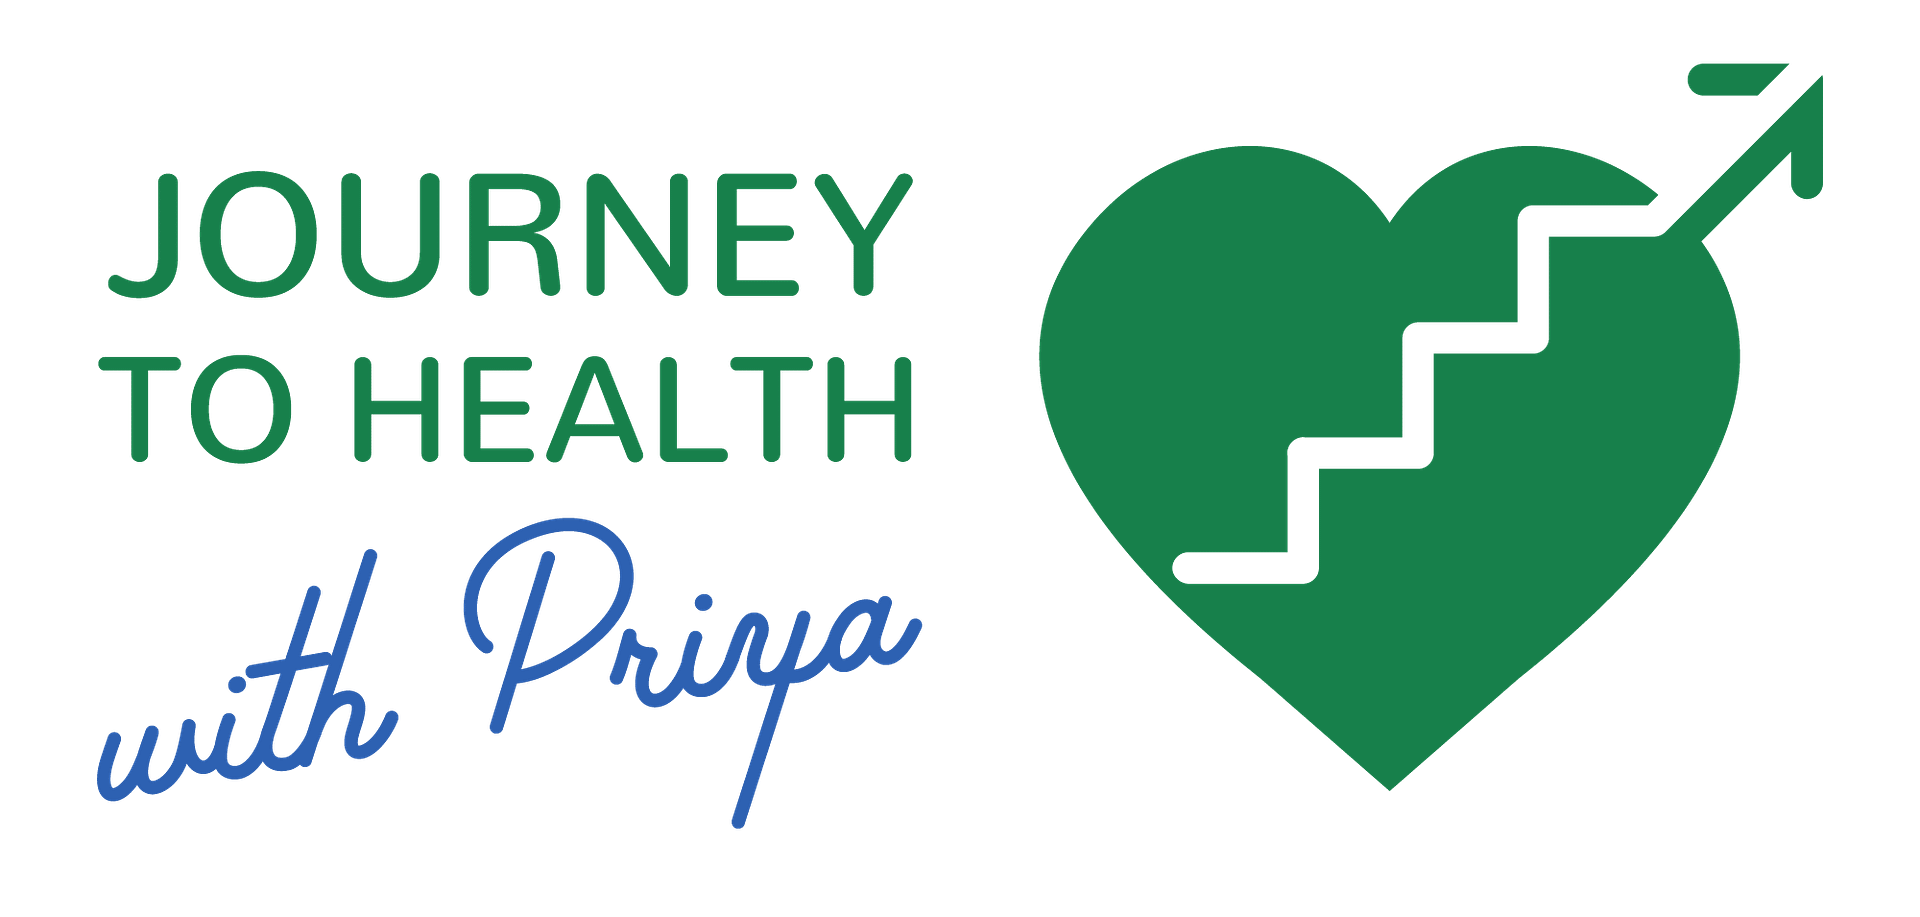 Journey to Health with Priya